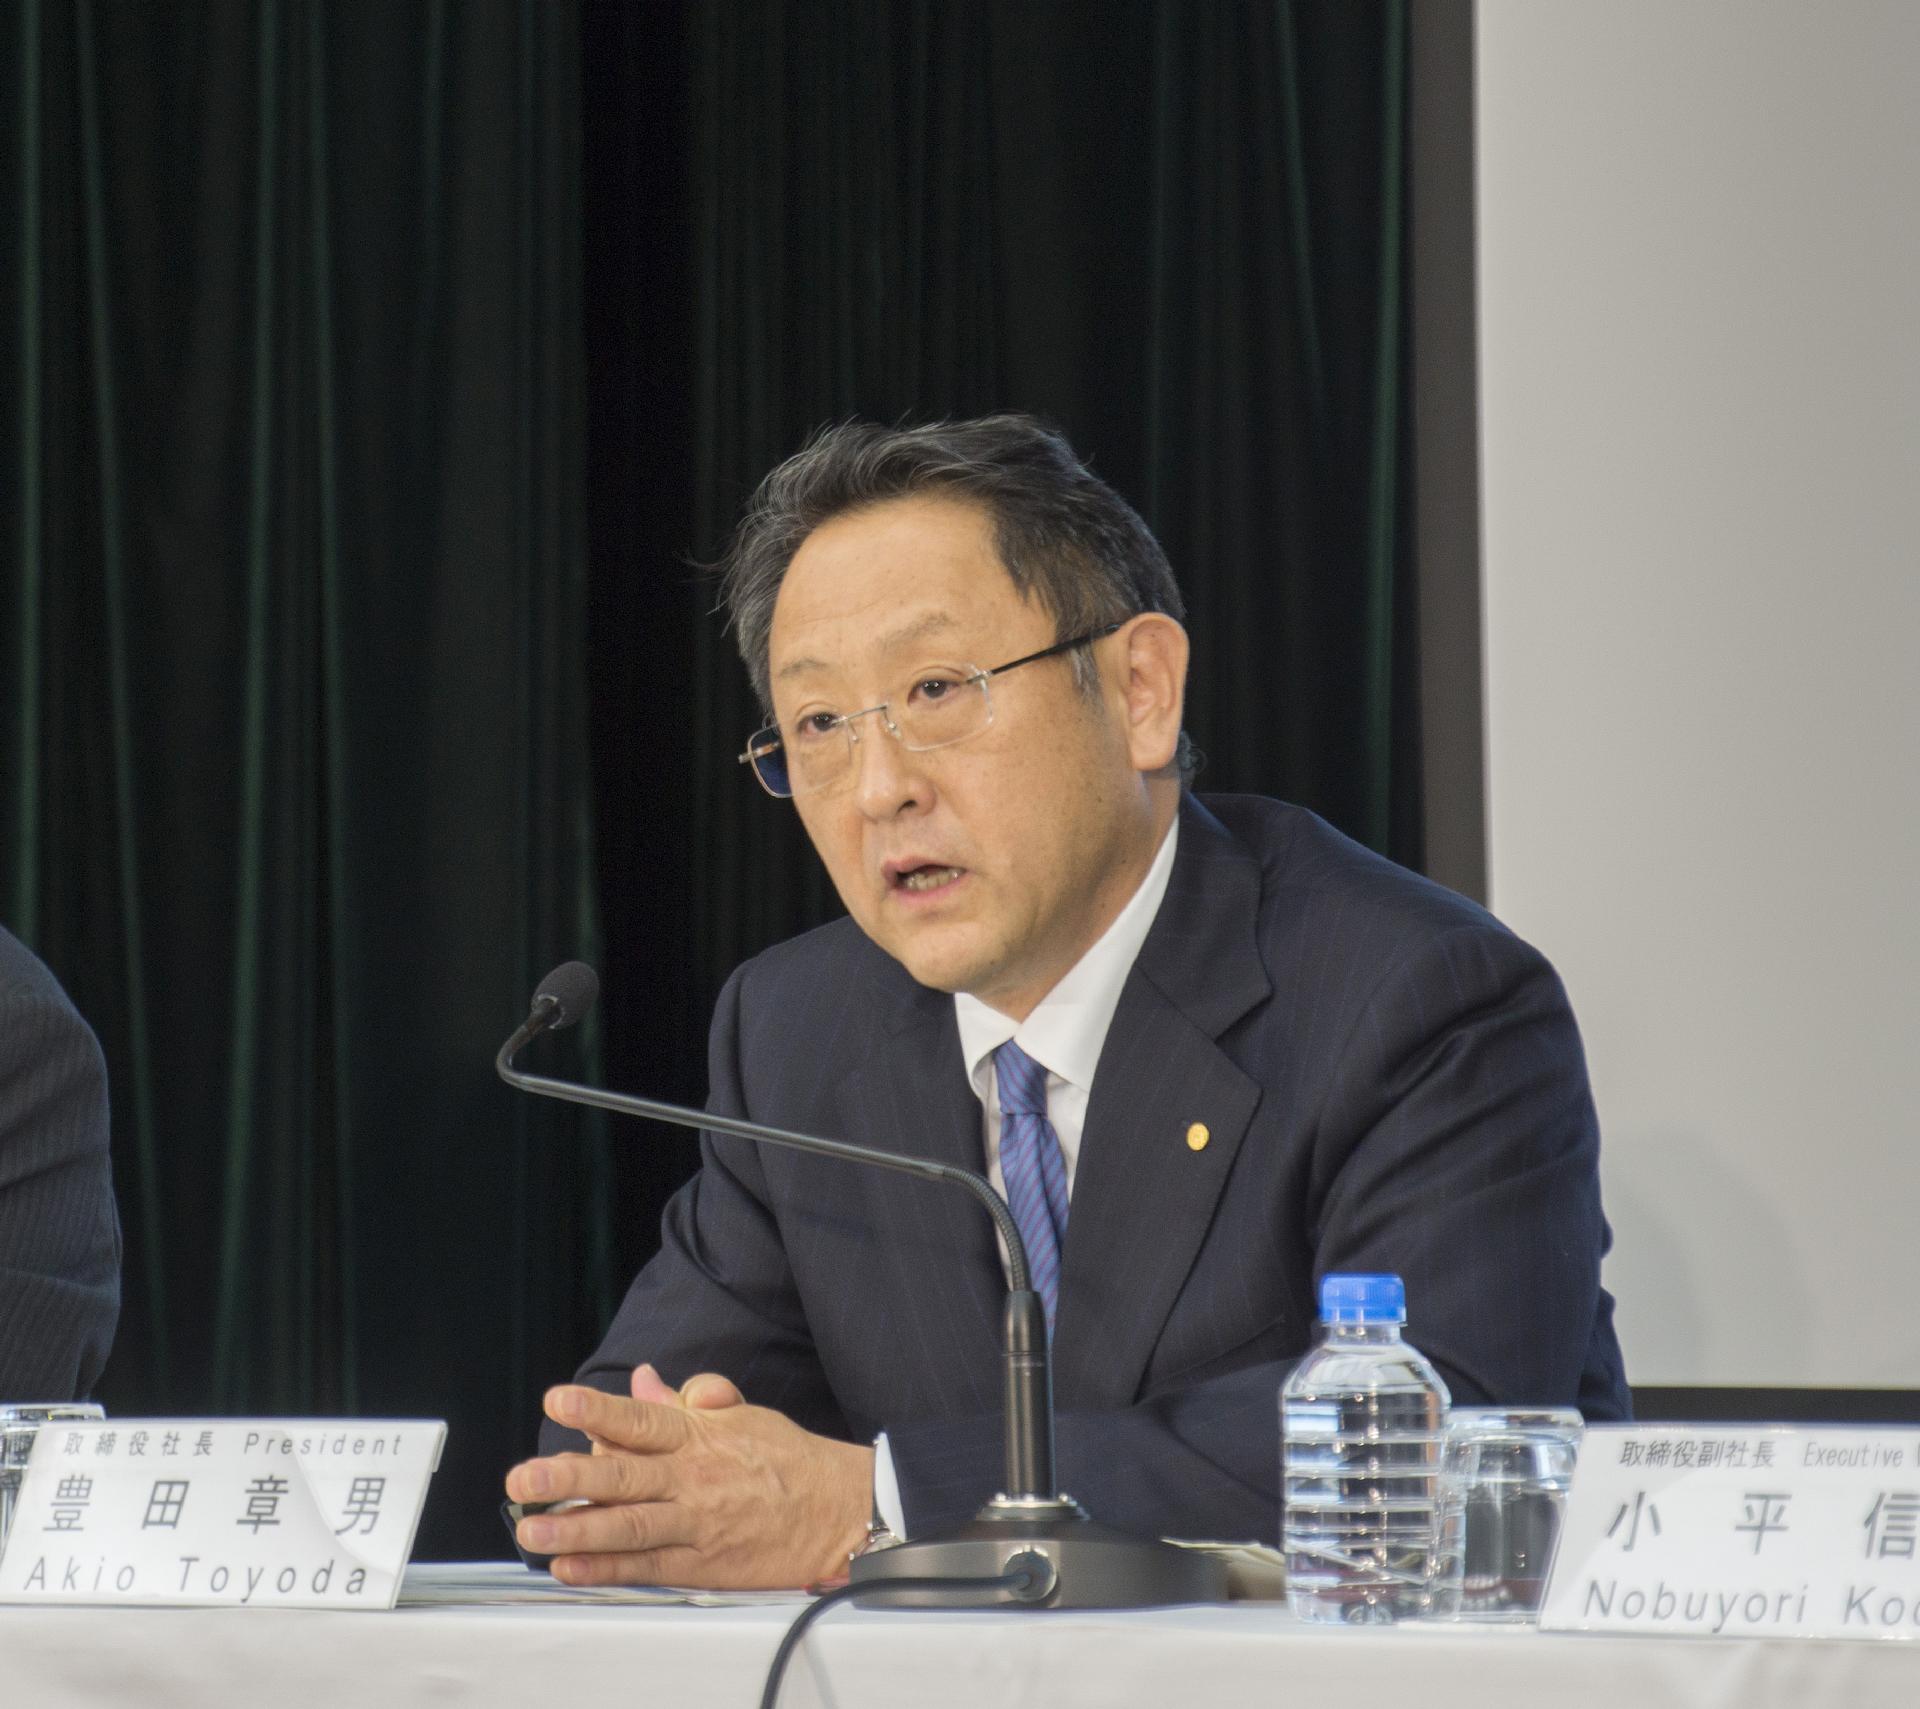 President Akio Toyoda Toyota Motor Corporation Official Global Website